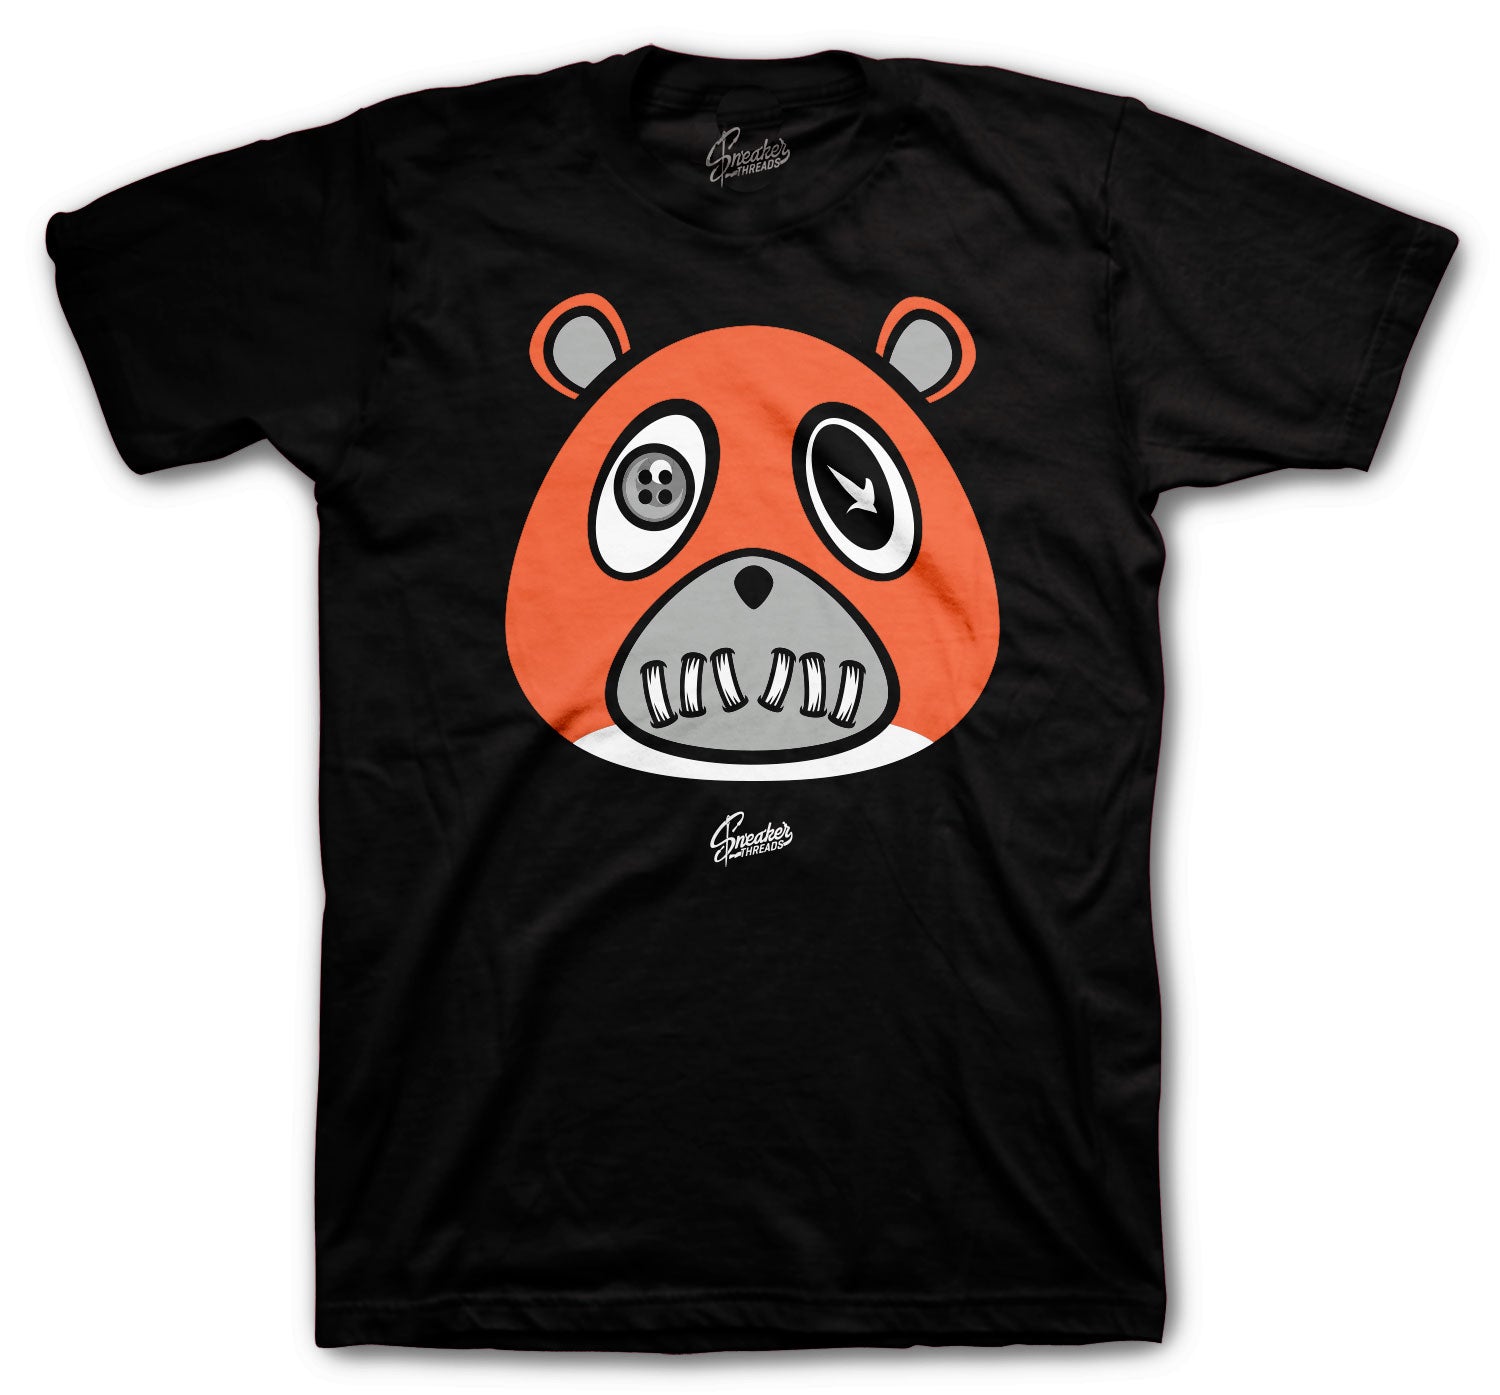 Retro 1 Electro Orange Shirt - ST Bear - Black